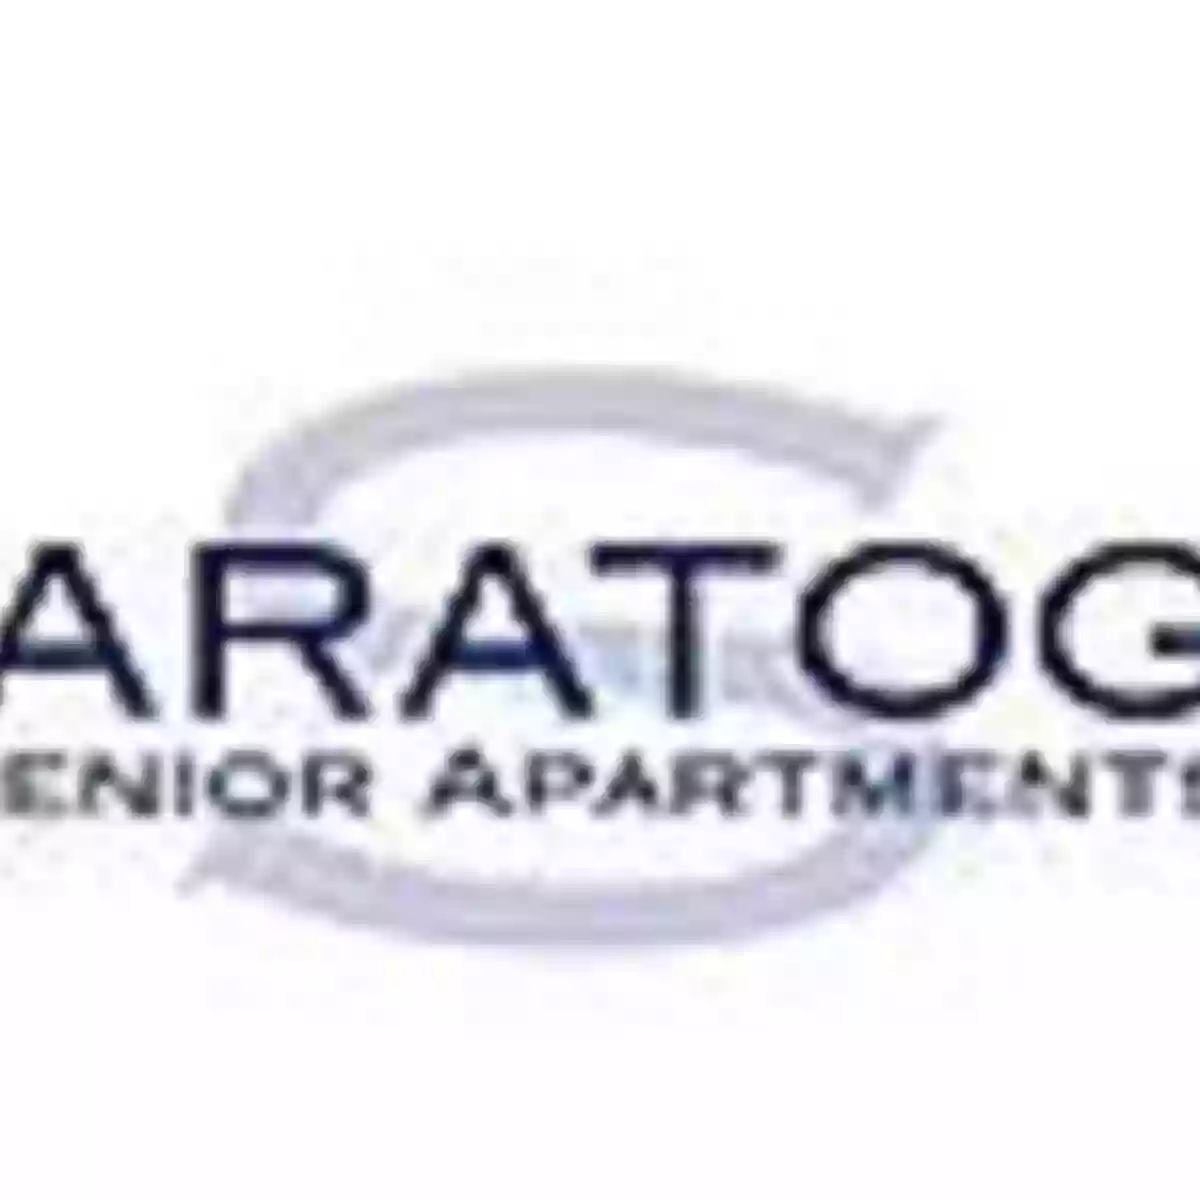 Saratoga Senior Apartments